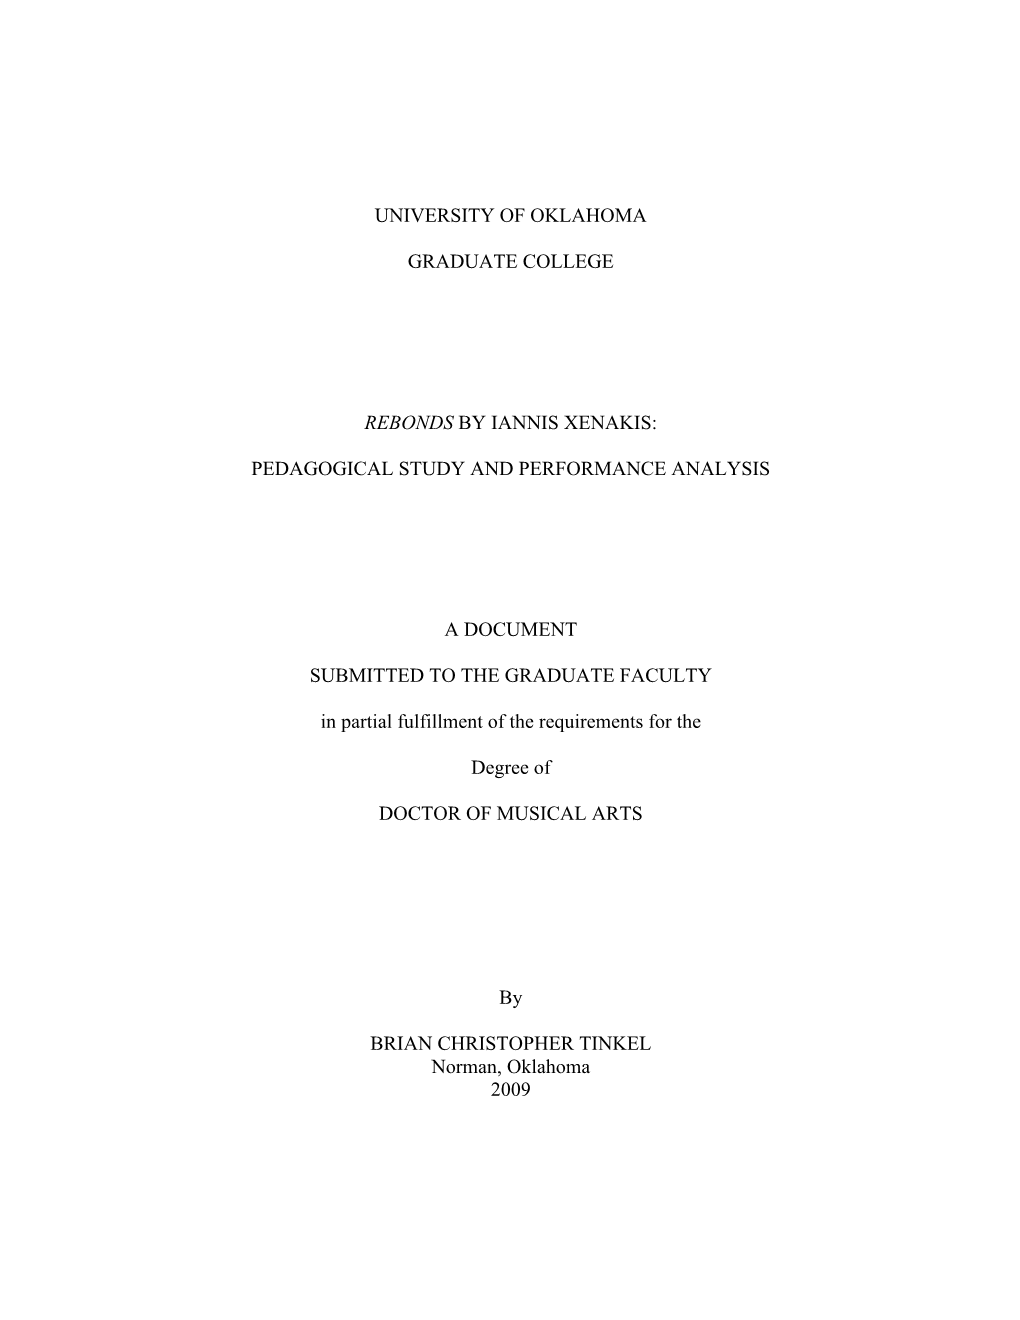 University of Oklahoma Graduate College Rebonds